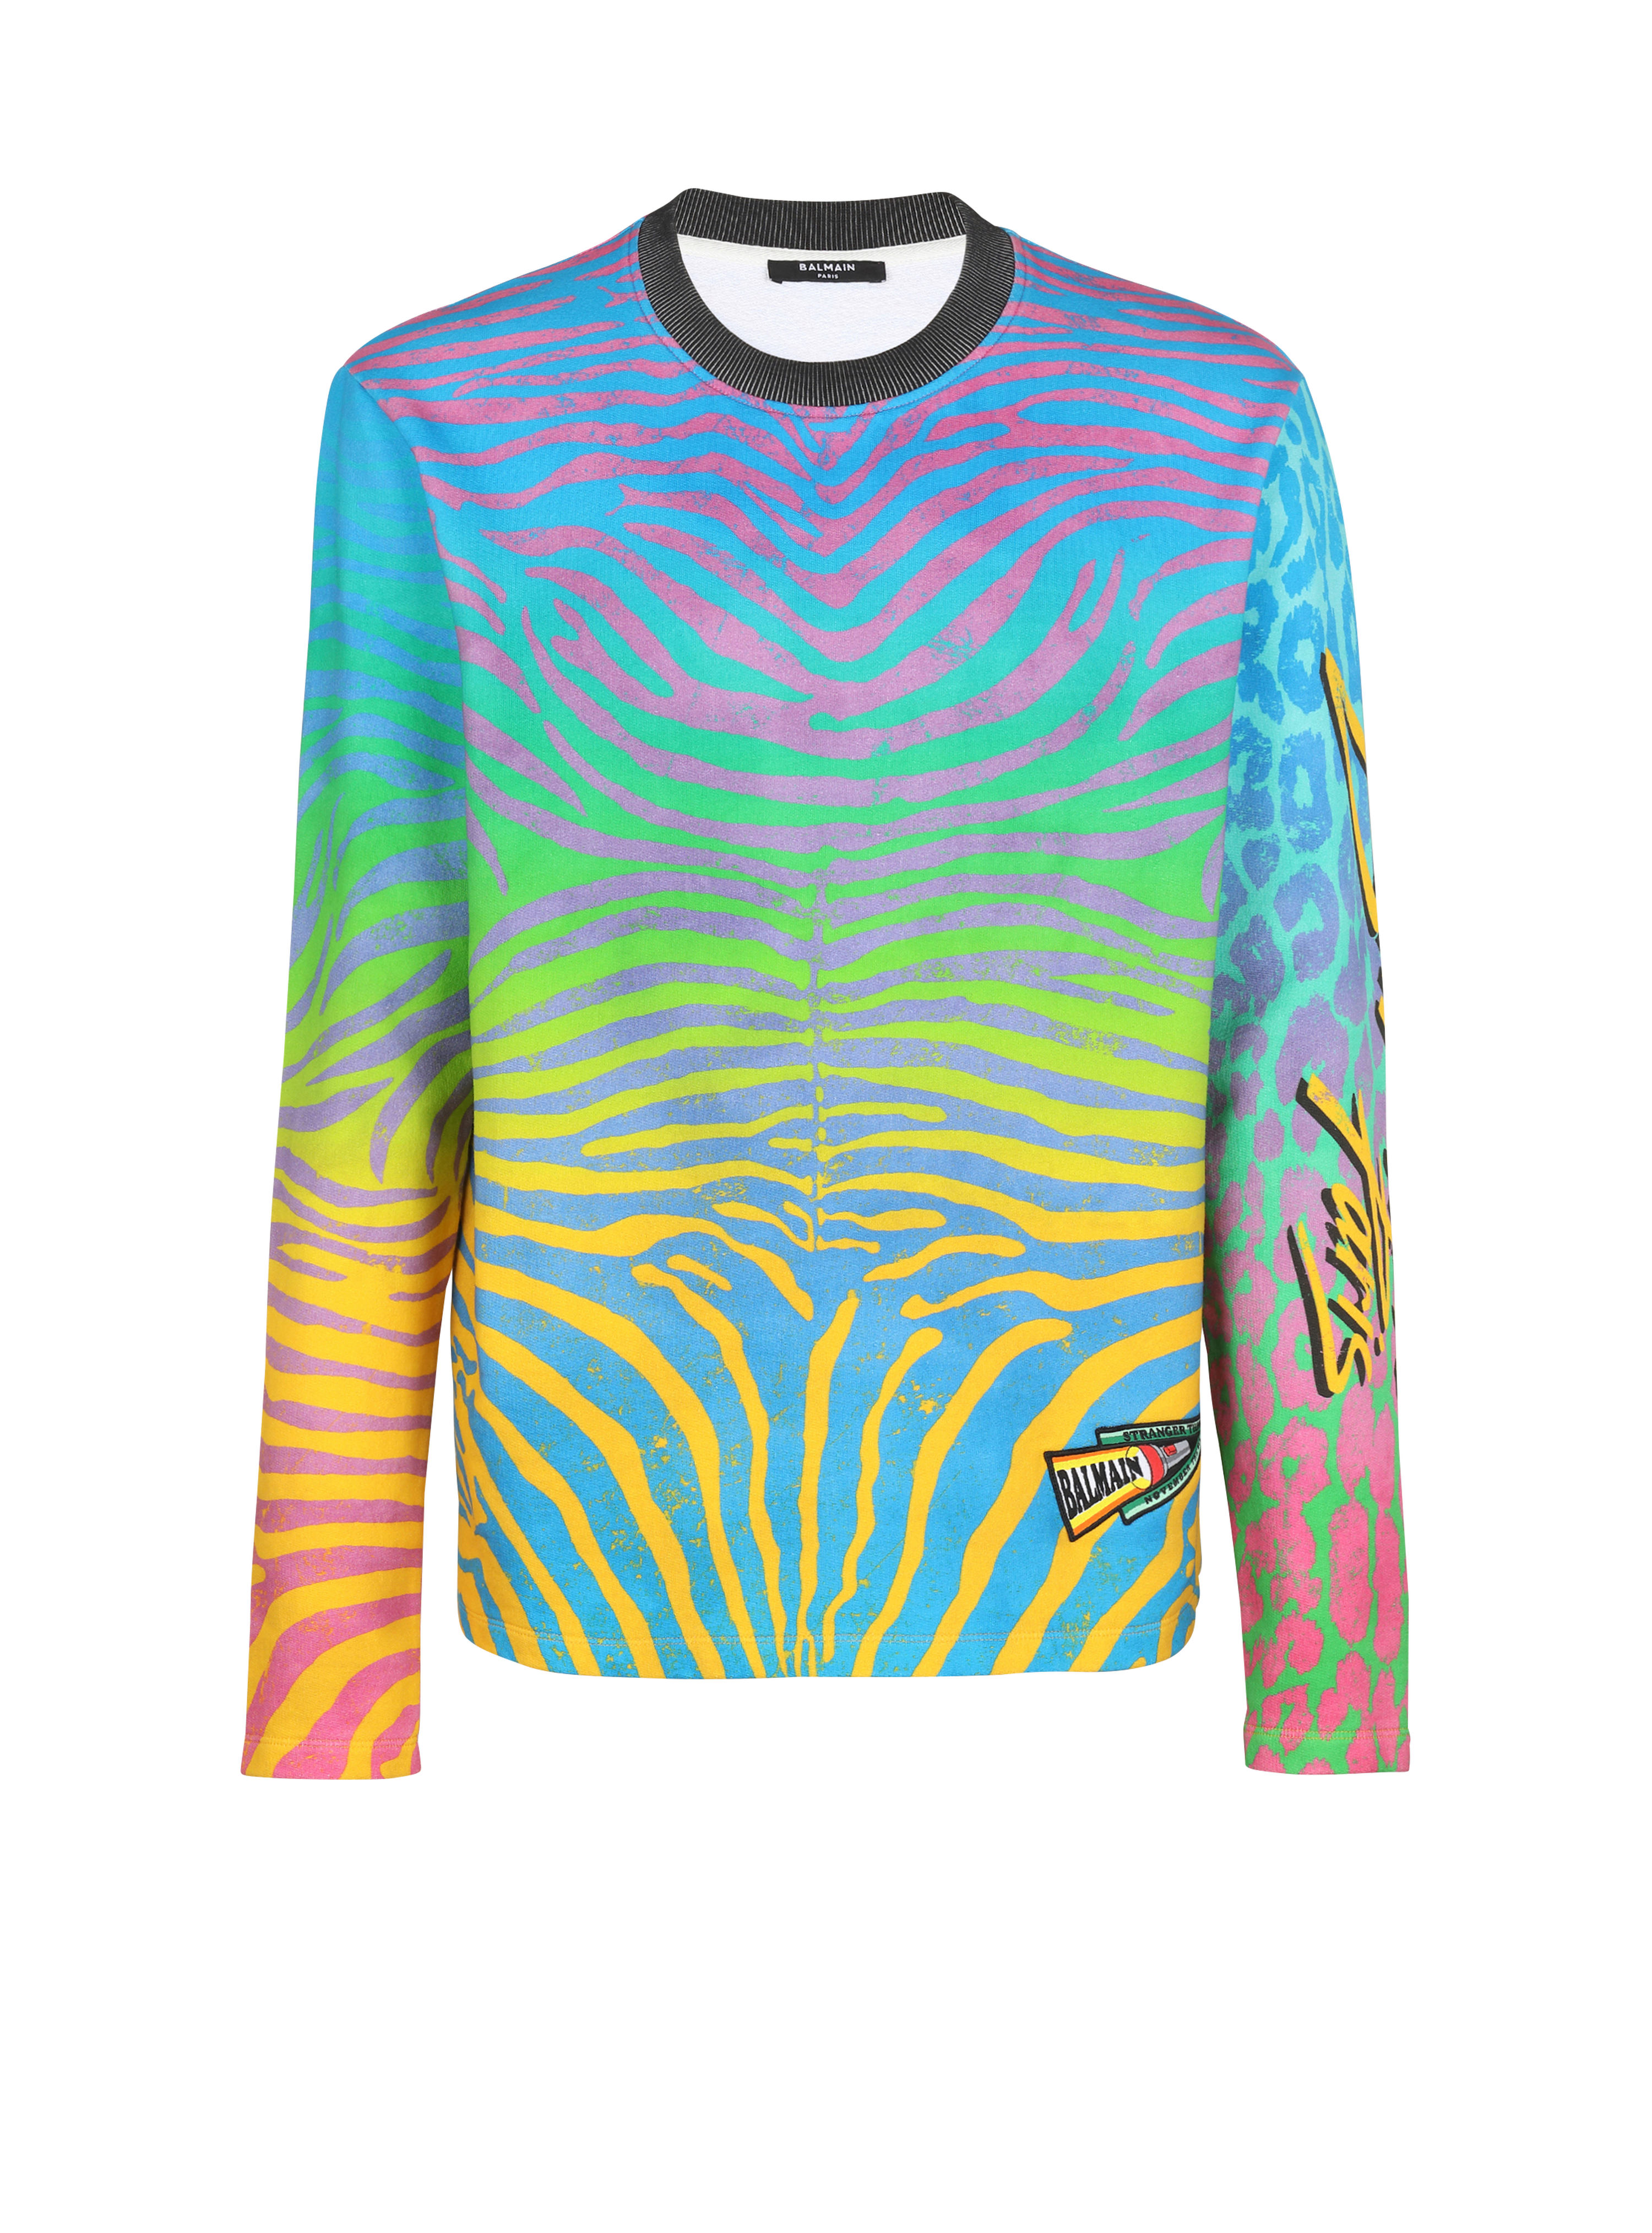 Balmain x Stranger Things - Zebra print T-shirt, multicolor